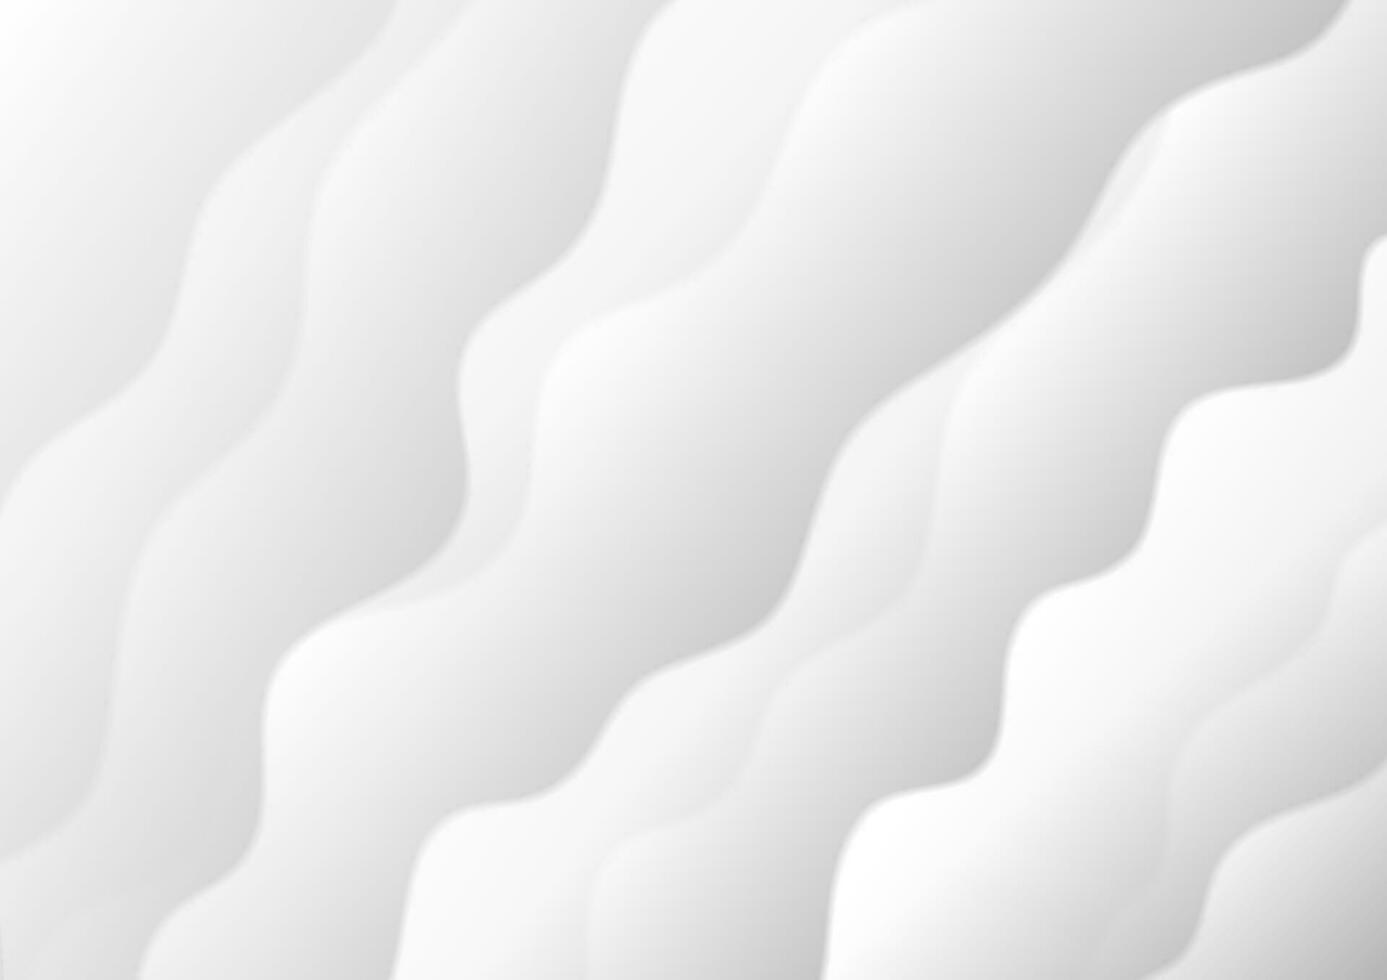 abstract wit en grijs zacht golven achtergrond vector